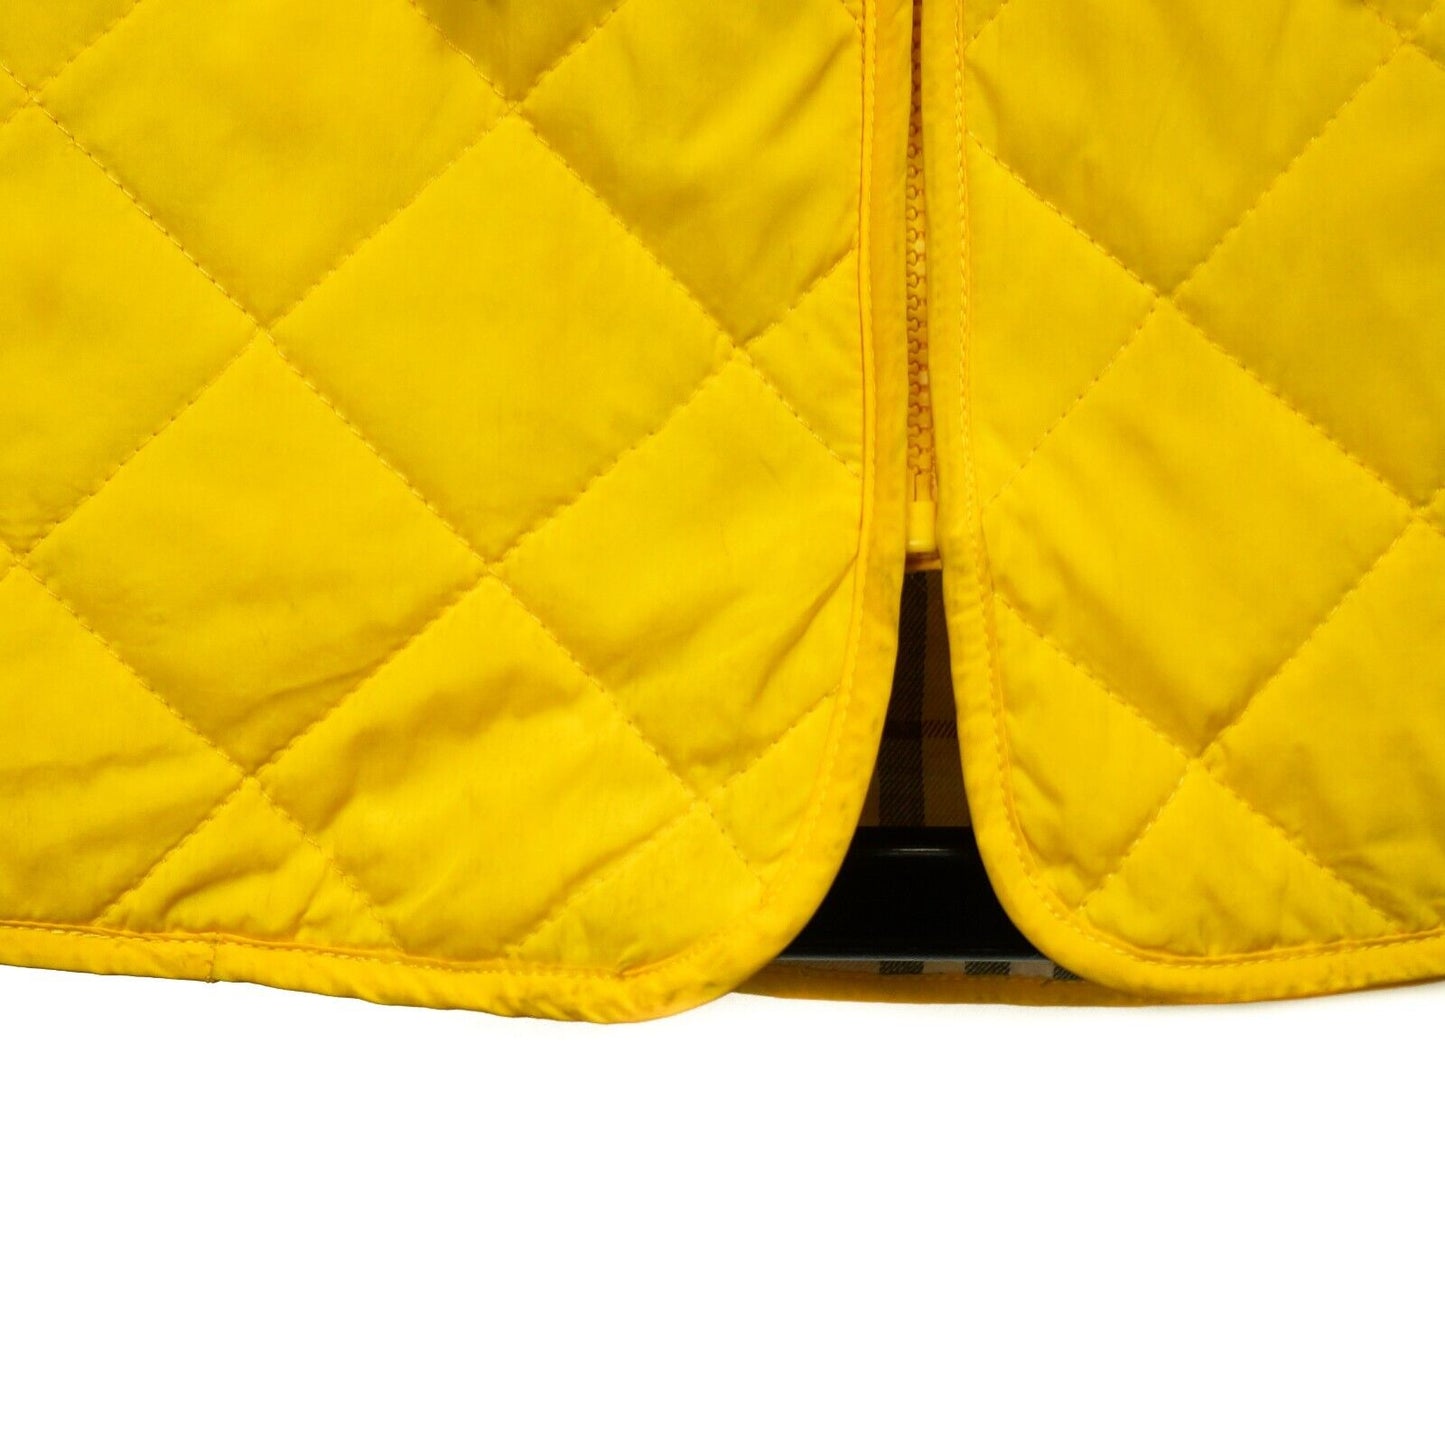 BURBERRY Check Yellow Vest Hood Vintage 90s 00s